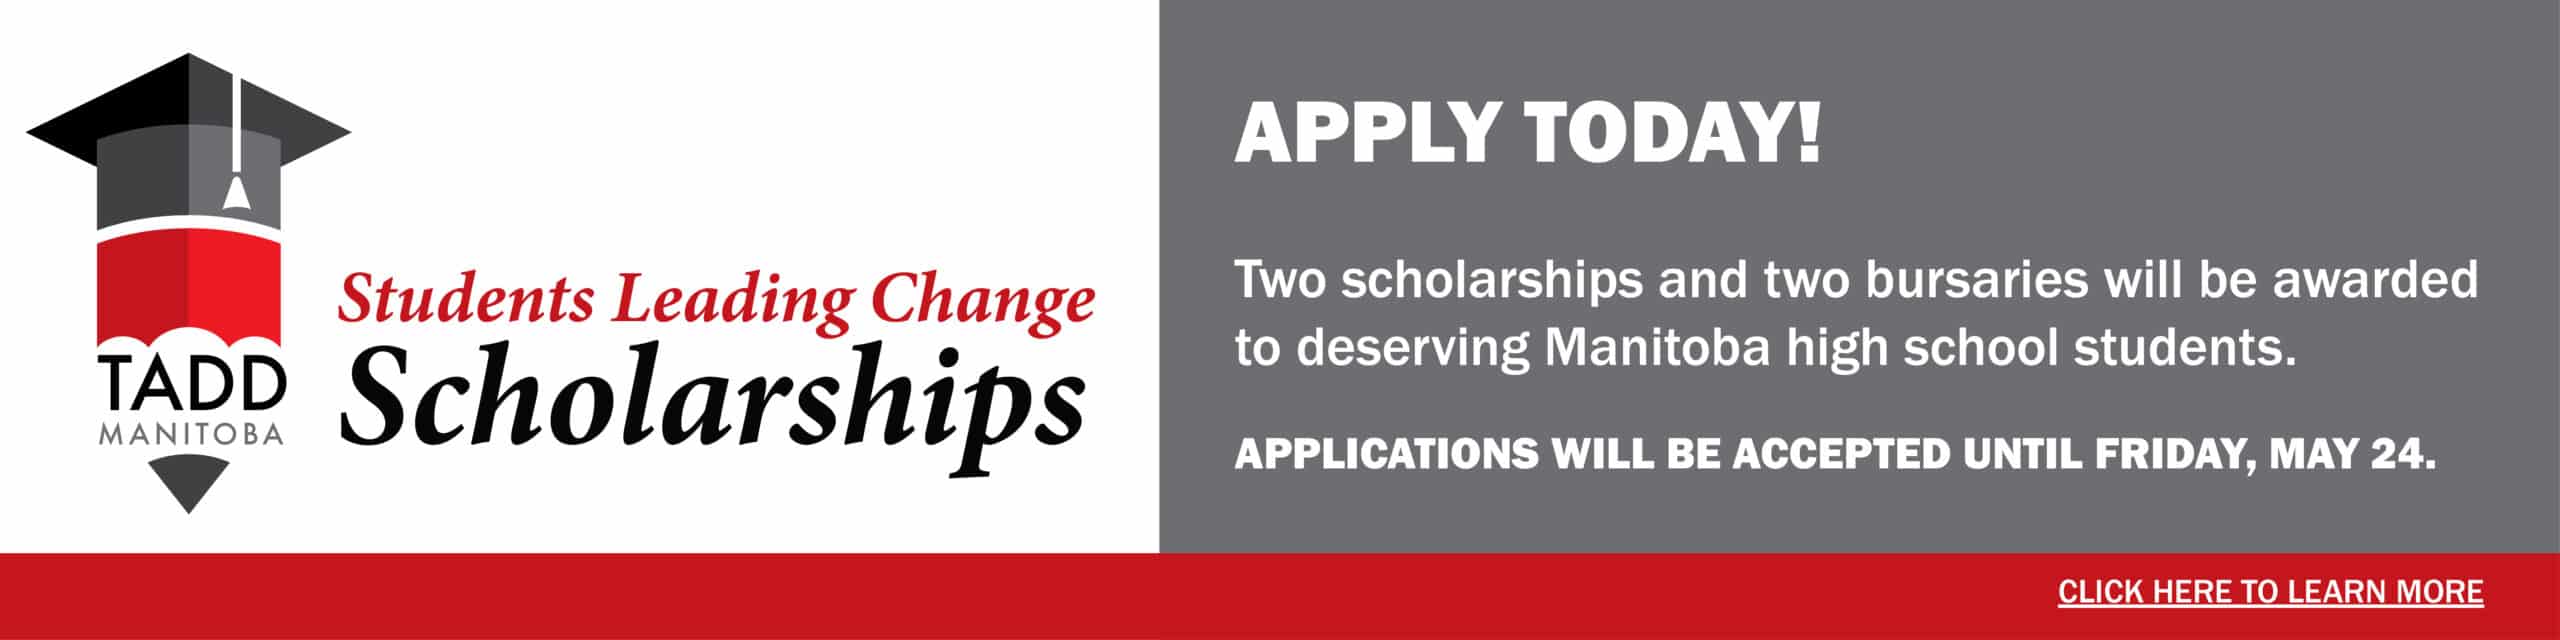 TADD Manitoba Students Leading Change Scholarships banner